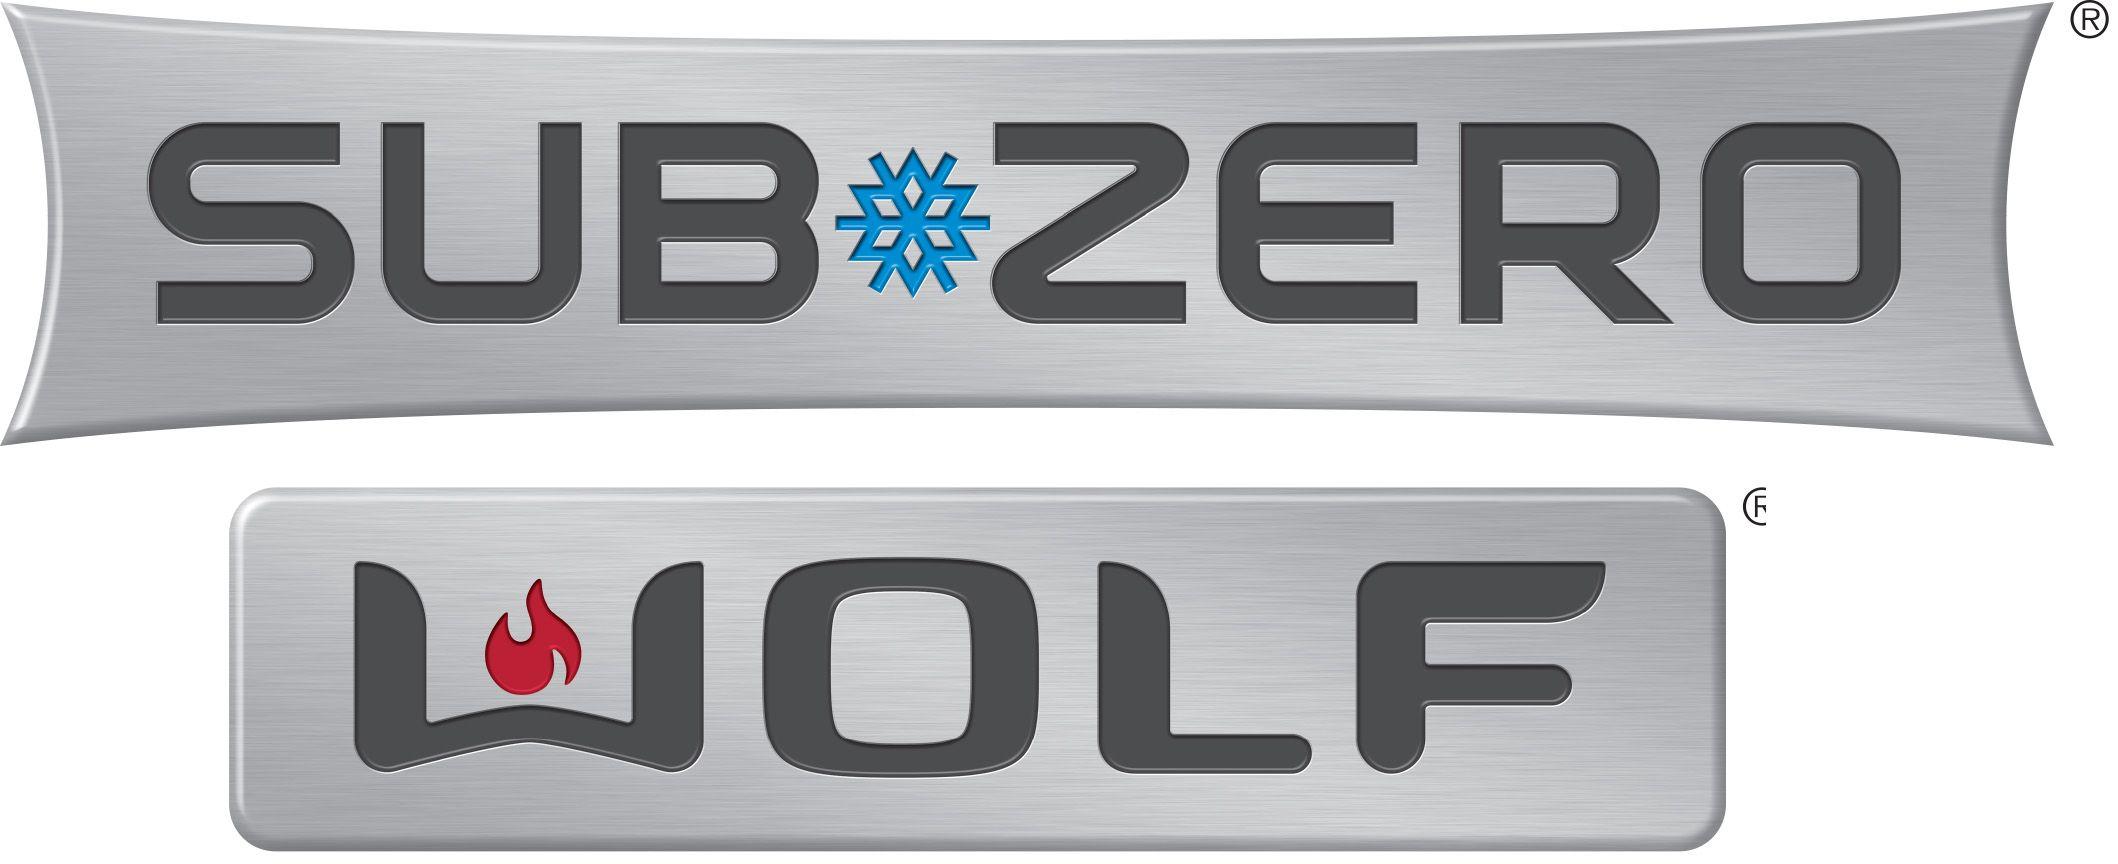 Wolf Appliance Logo - Wolf Appliance